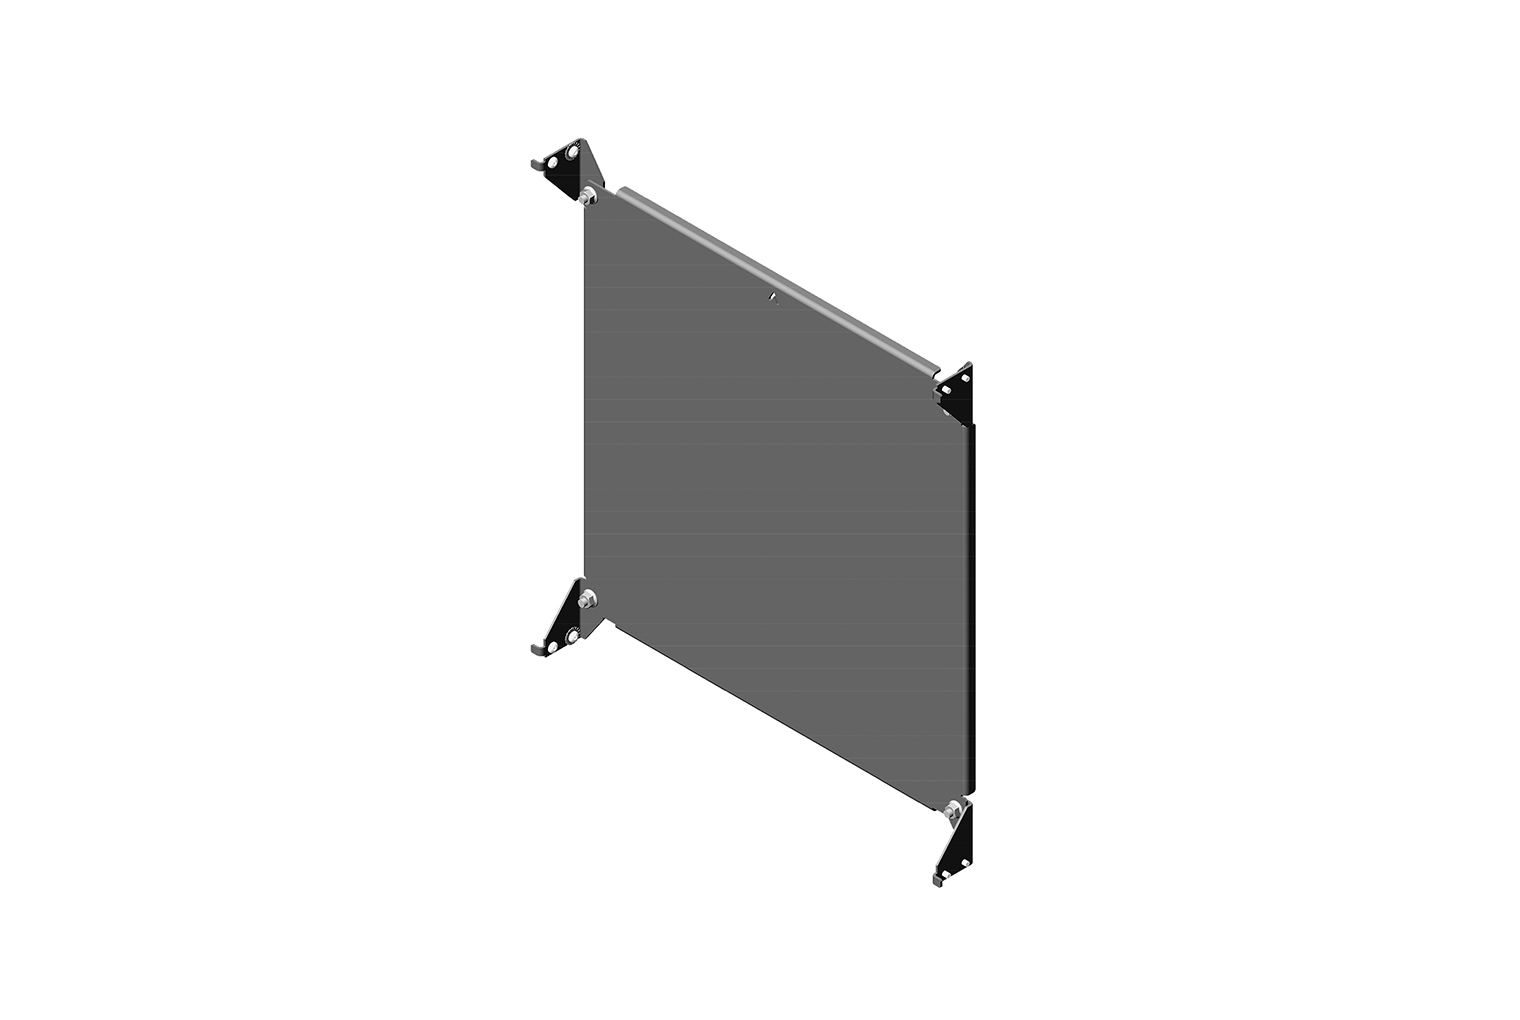 RMR Wall-Mount Enclosure Adjustable Depth Mounting Plate Image